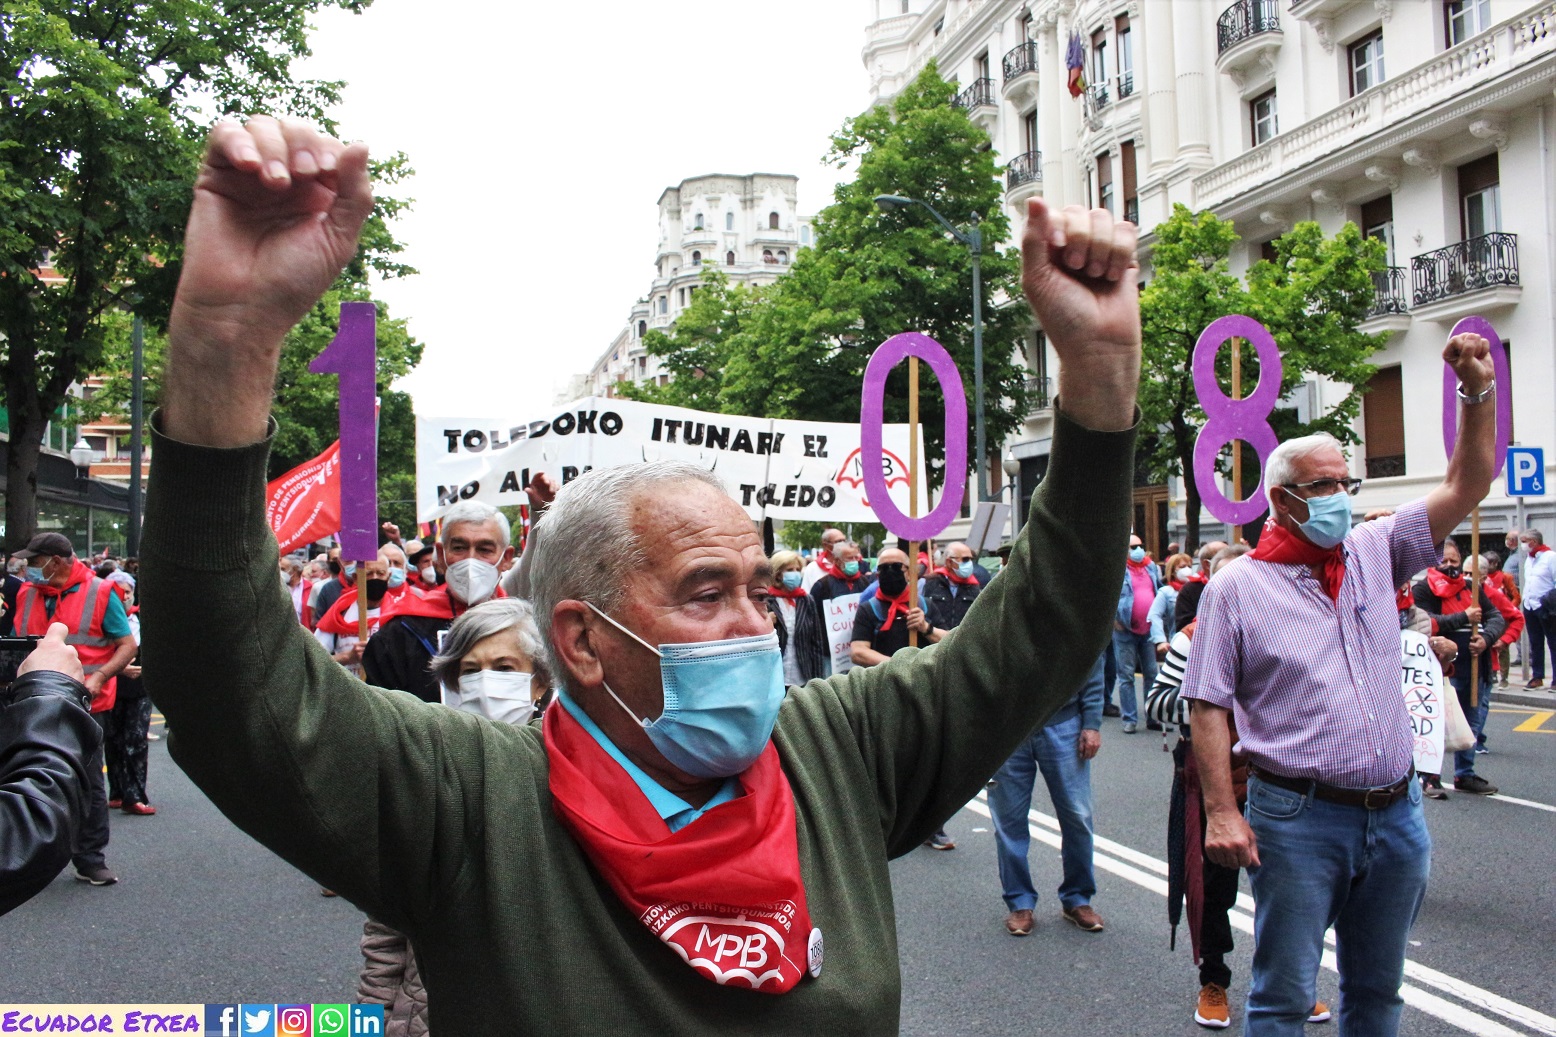 pensionistas-bilbao-vascos-euskalherria-reforma-2013-gobierno-escrivá-pensiones-mínimas-mesa-diálogo-social-sindicatos